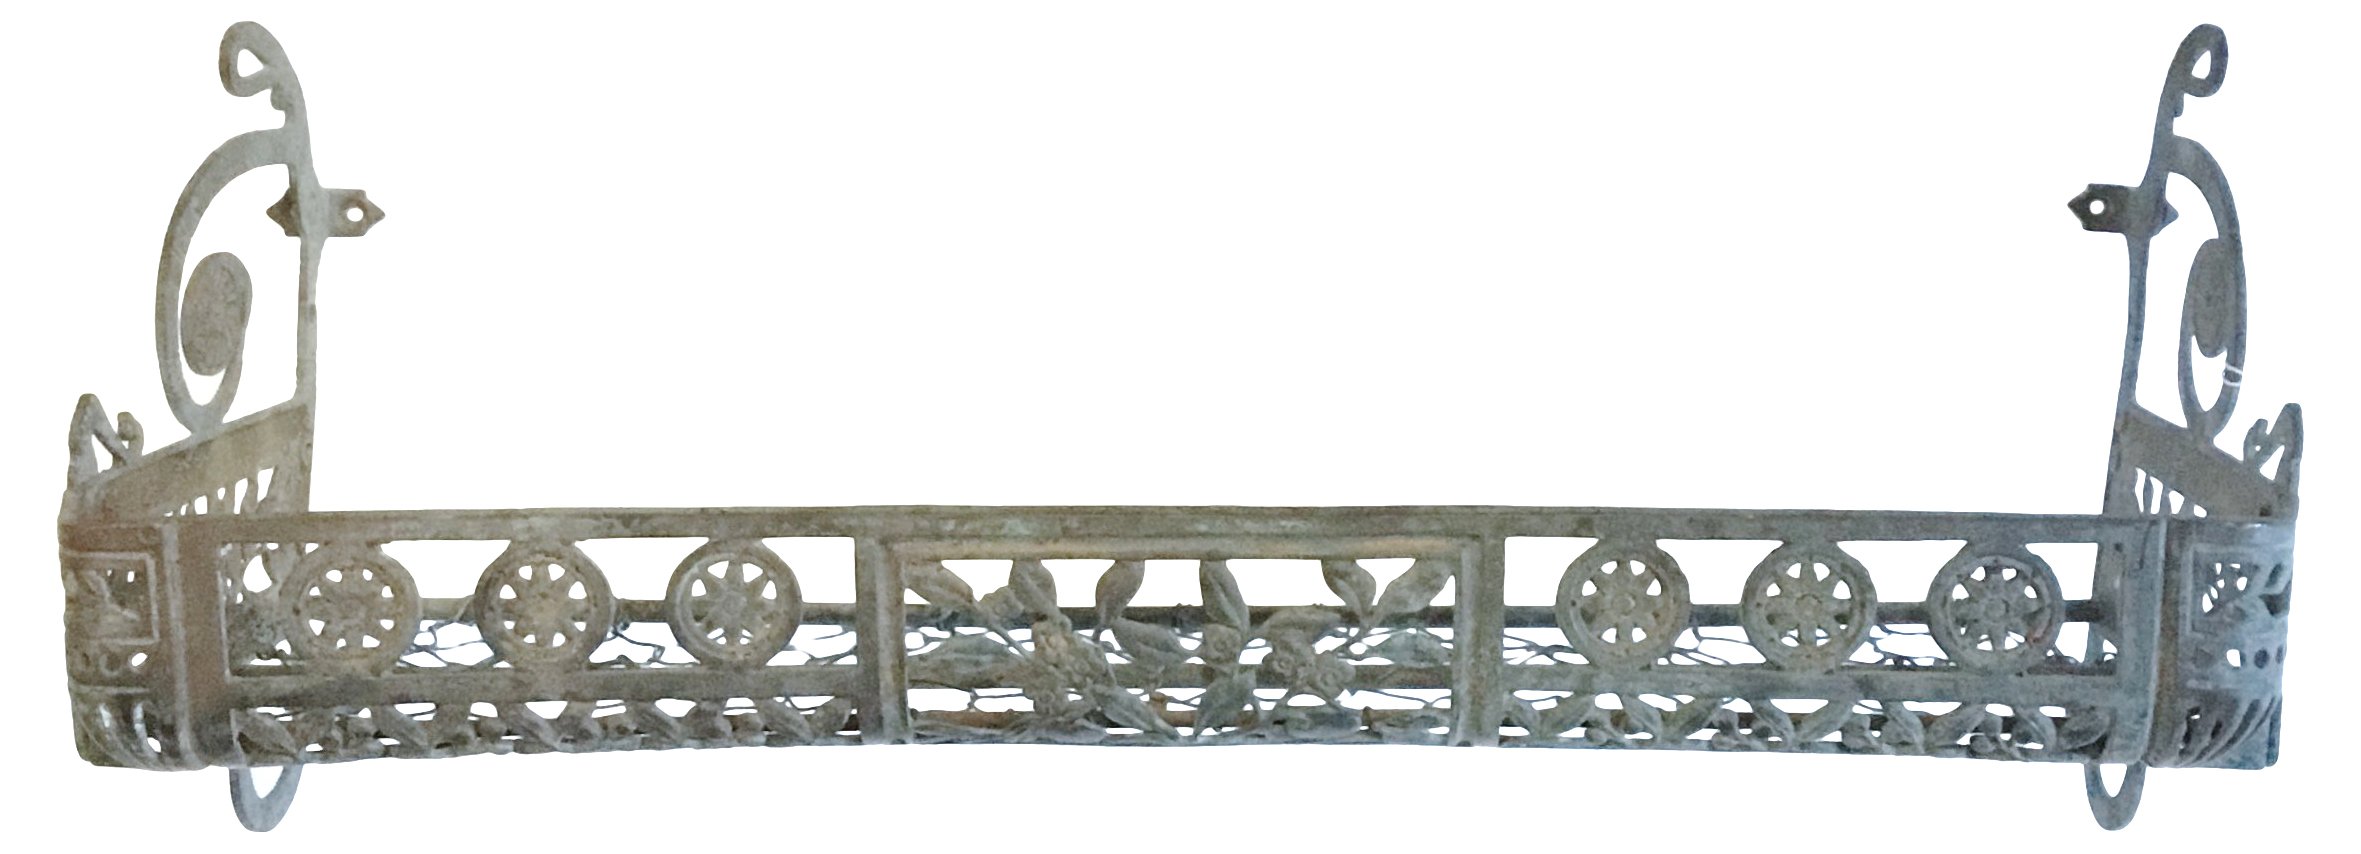 Wrought Iron, Wire, & Leaf Wall Shelf~P77517898